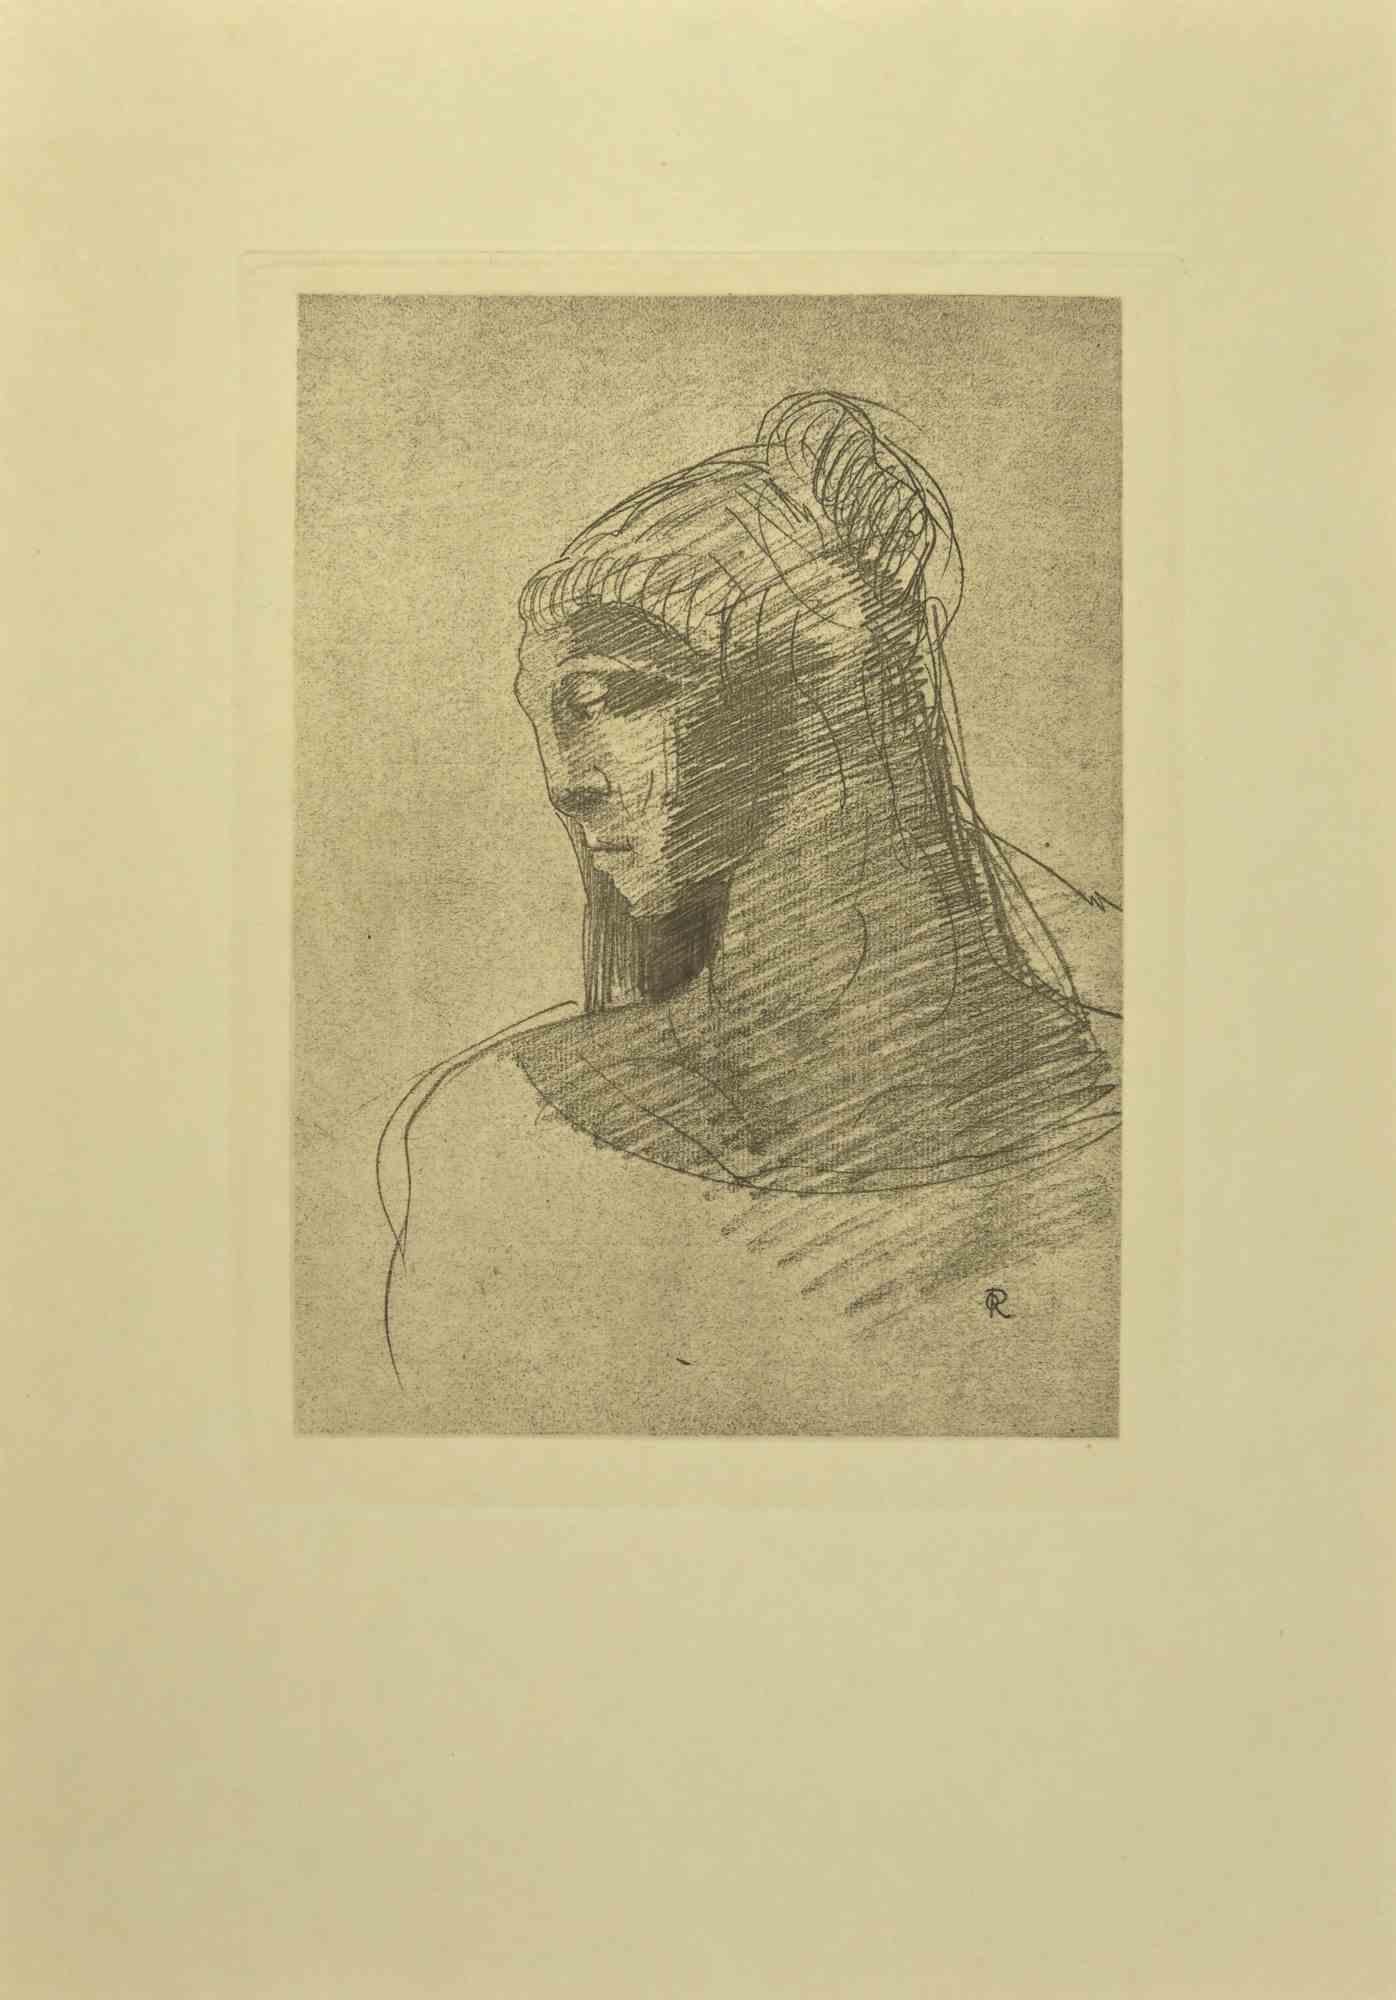 Illustration from the Series "Les Fleurs du Mal" after Odilon Redon - 1923